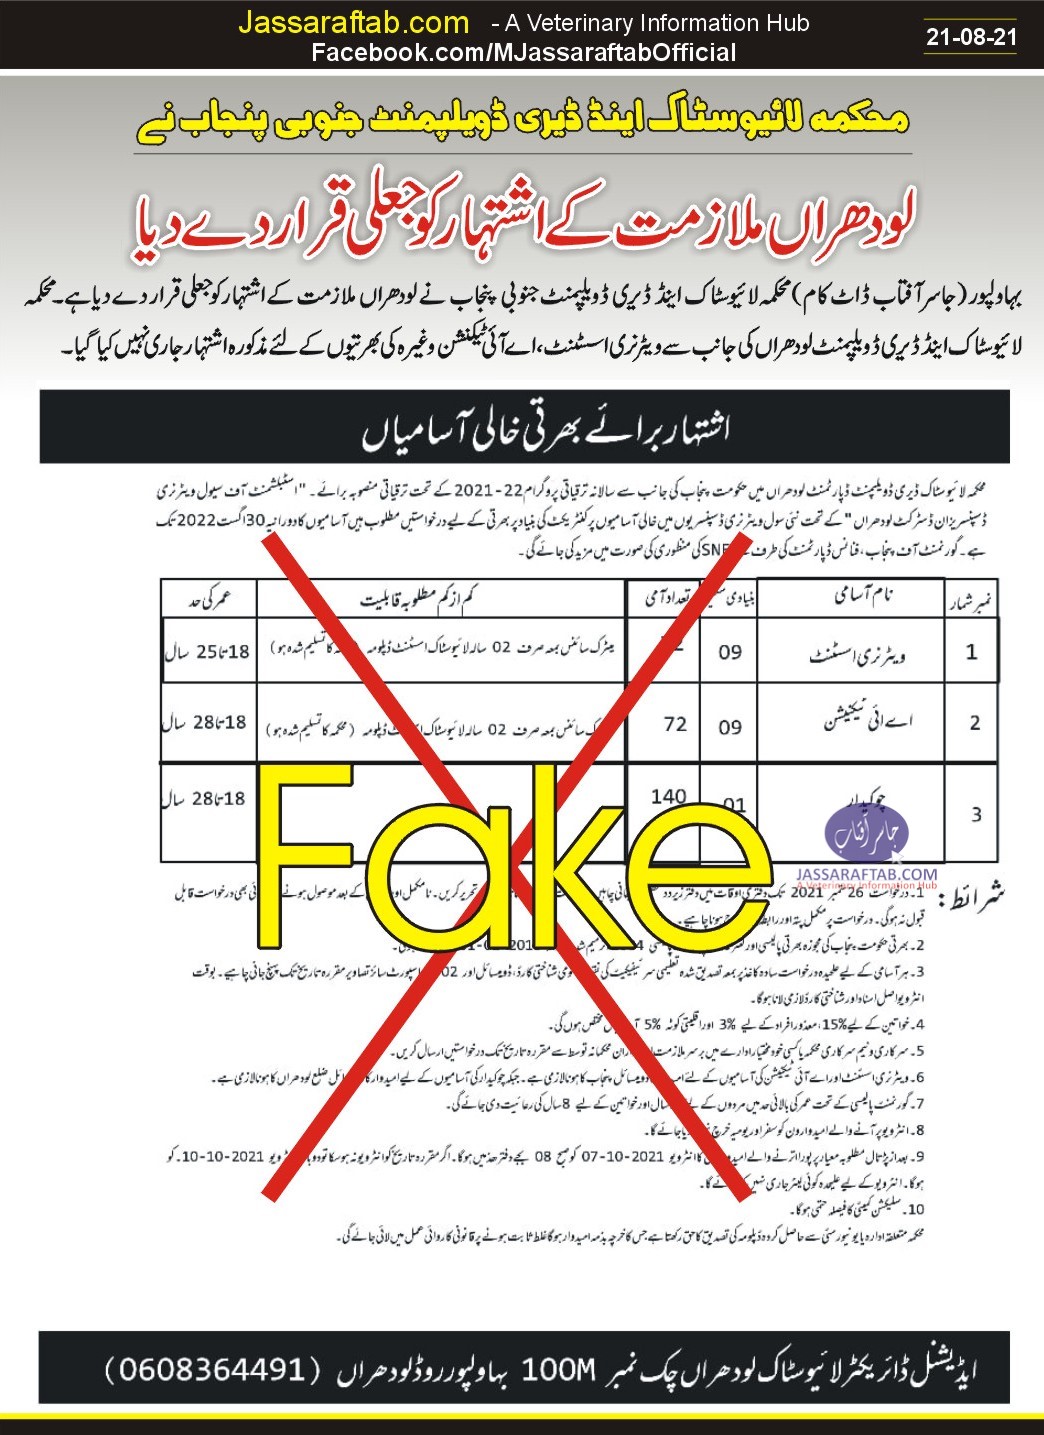 Fake advertisement of livestock department | Fake Livestock Job